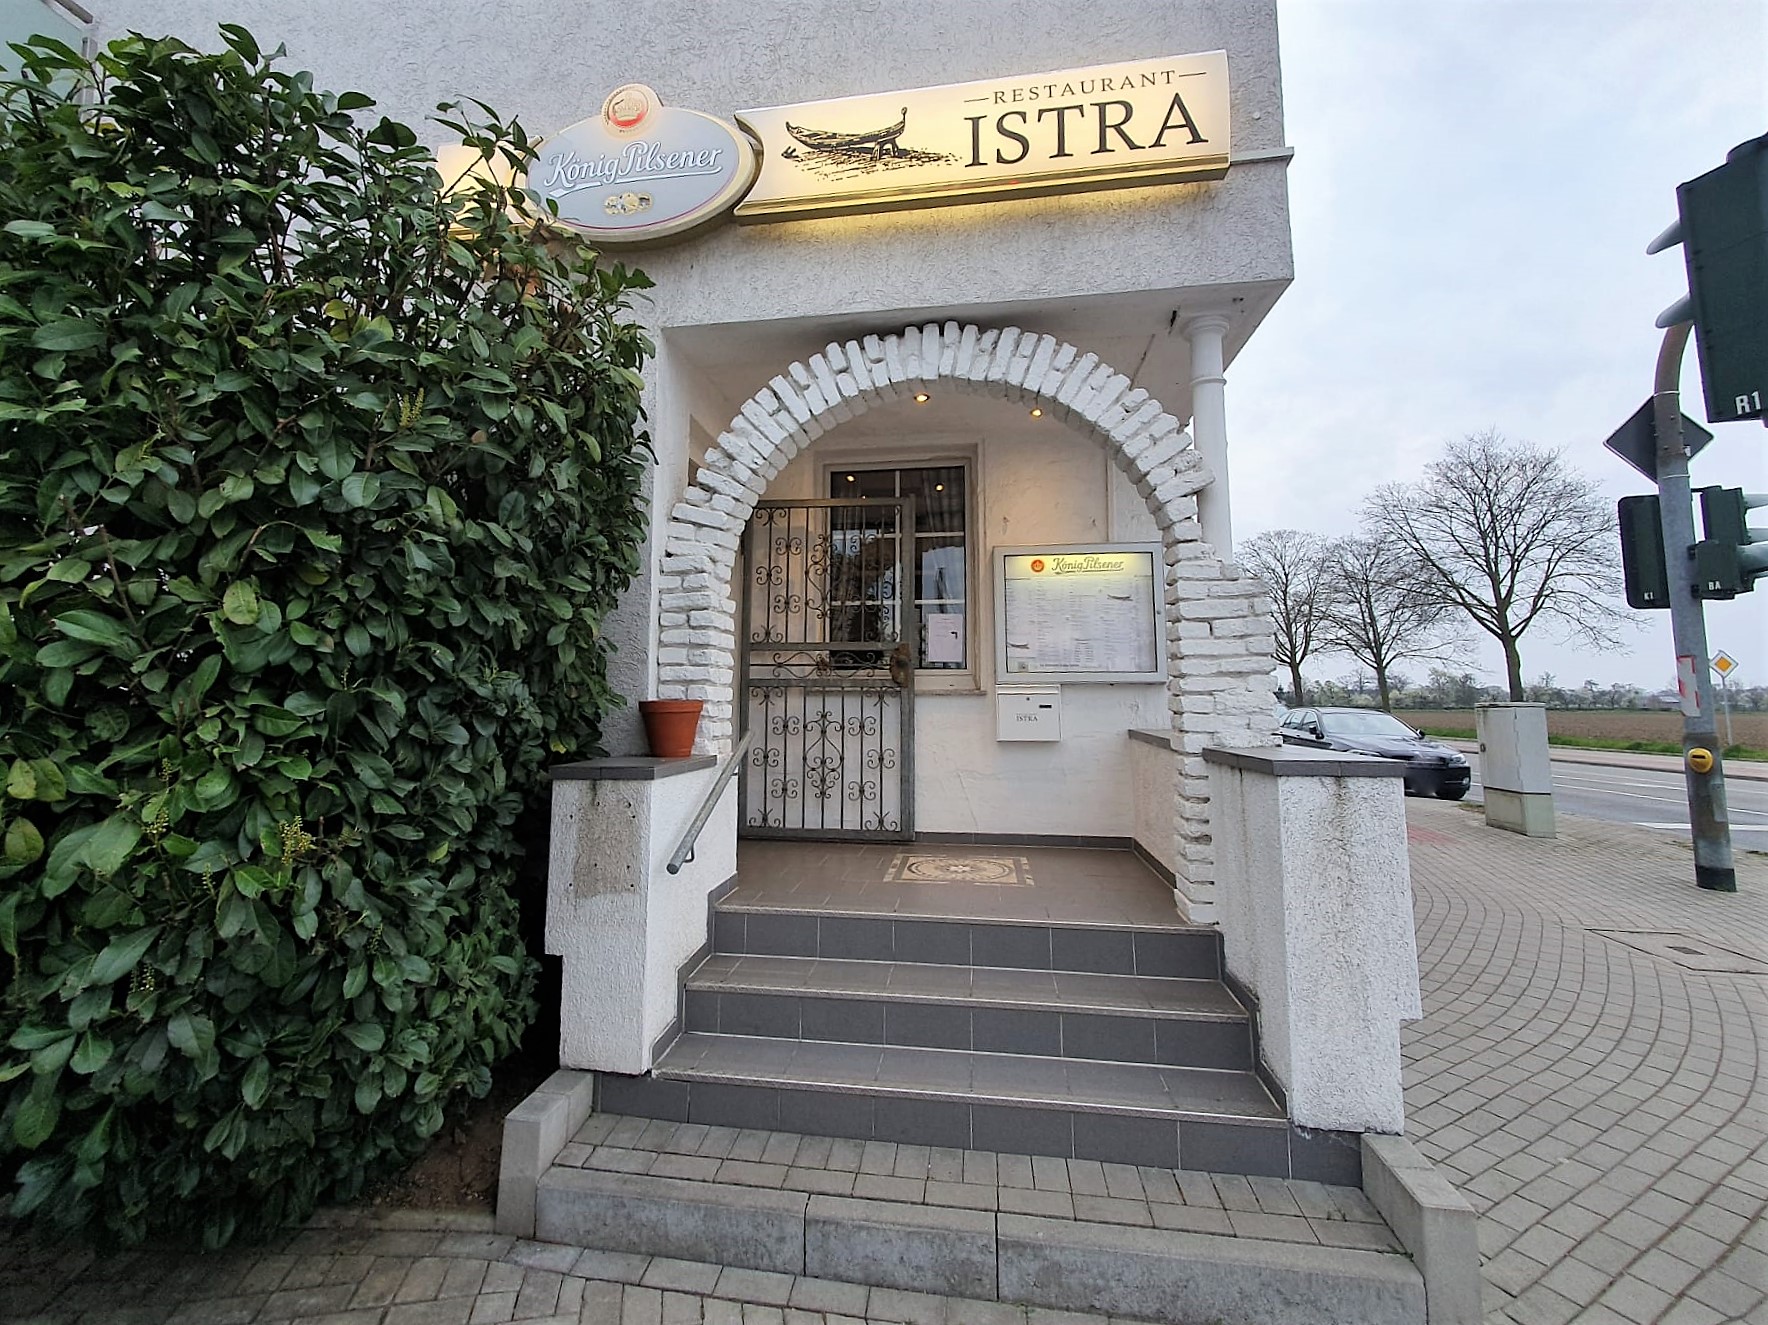 Restaurant Istra